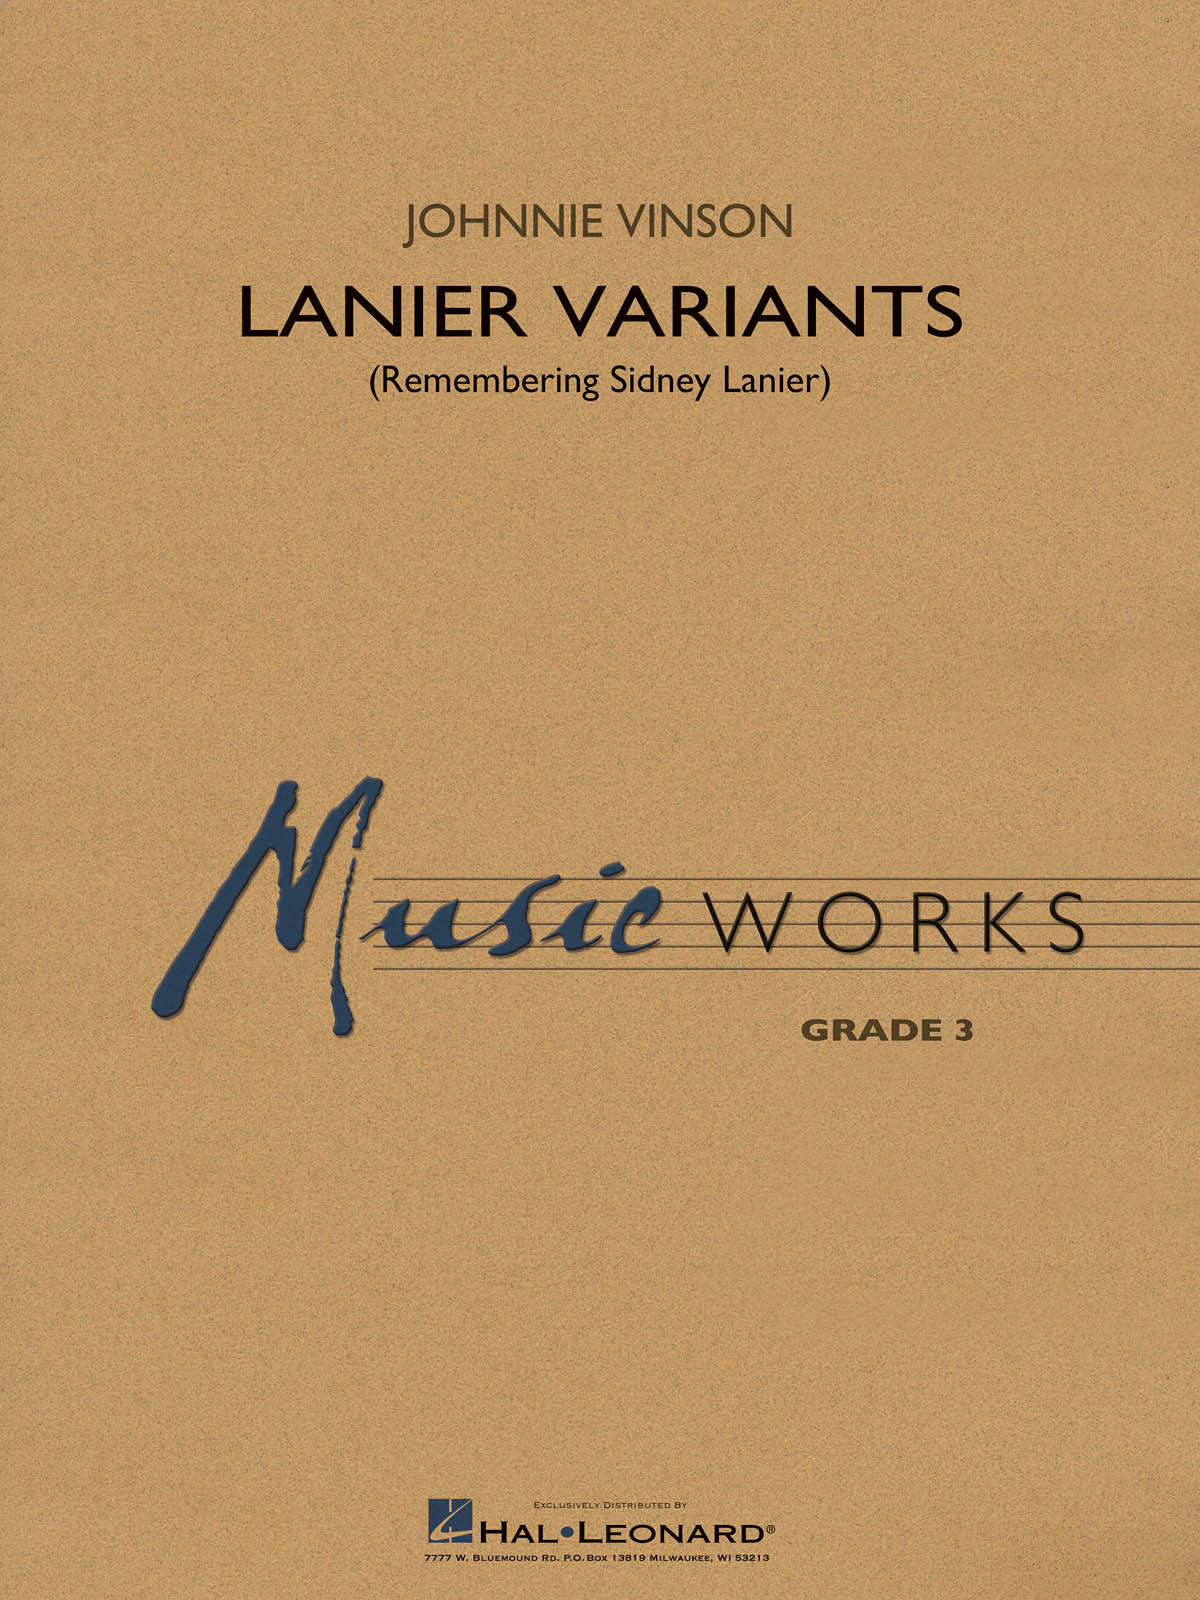 Johnnie Vinson: Lanier Variants: Concert Band: Score and Parts